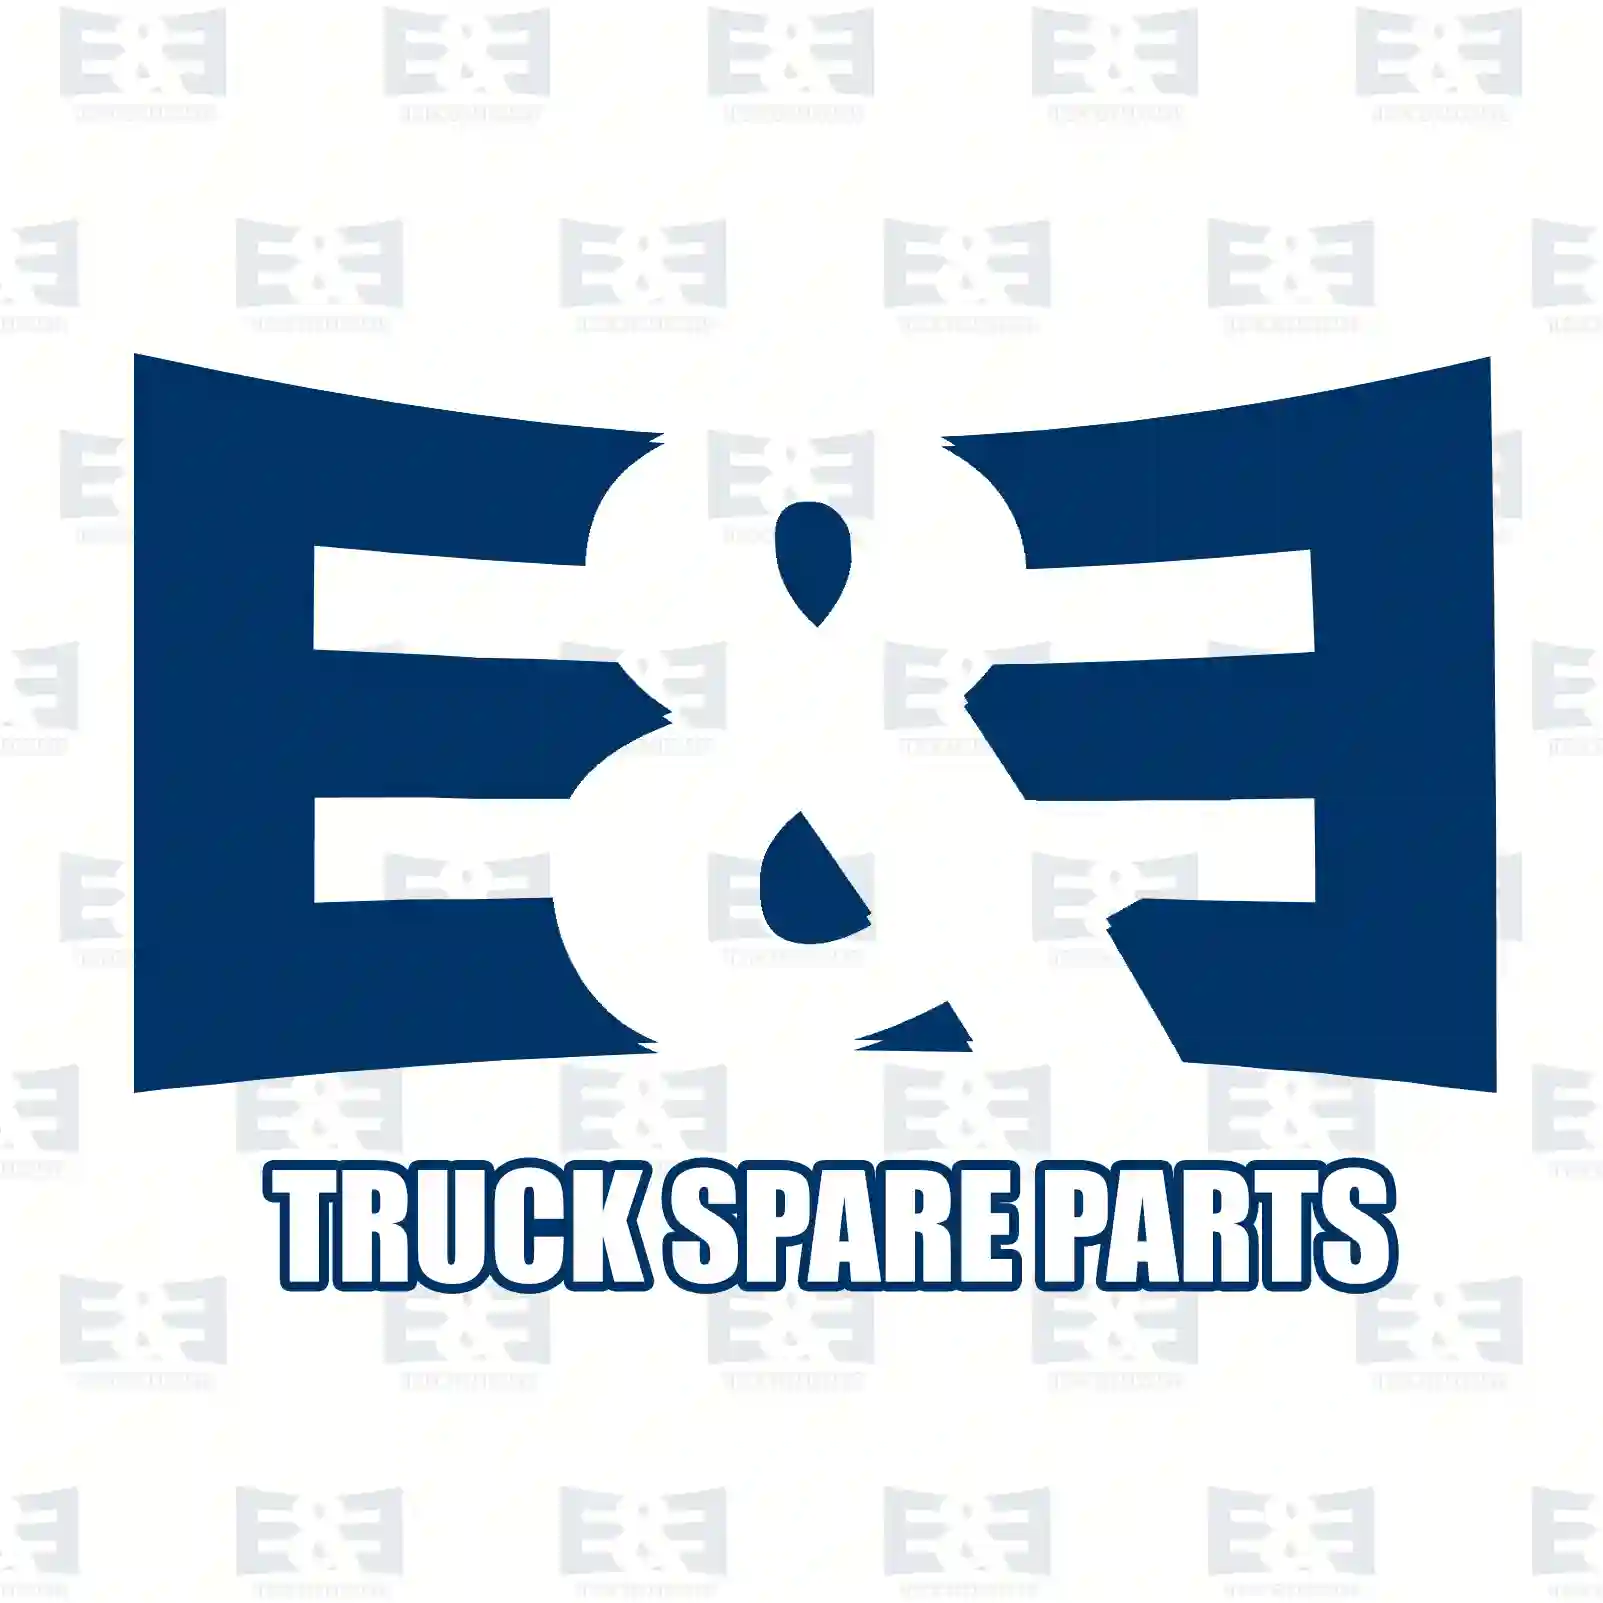 Drum brake lining kit, axle kit, 2E2294338, 1504643, 1504644, 270538, 272522, 272528, 272549, 272694, 272754, 272888, 276042, 3091276, 3097177, 3097177S, 351431 ||  2E2294338 E&E Truck Spare Parts | Truck Spare Parts, Auotomotive Spare Parts Drum brake lining kit, axle kit, 2E2294338, 1504643, 1504644, 270538, 272522, 272528, 272549, 272694, 272754, 272888, 276042, 3091276, 3097177, 3097177S, 351431 ||  2E2294338 E&E Truck Spare Parts | Truck Spare Parts, Auotomotive Spare Parts